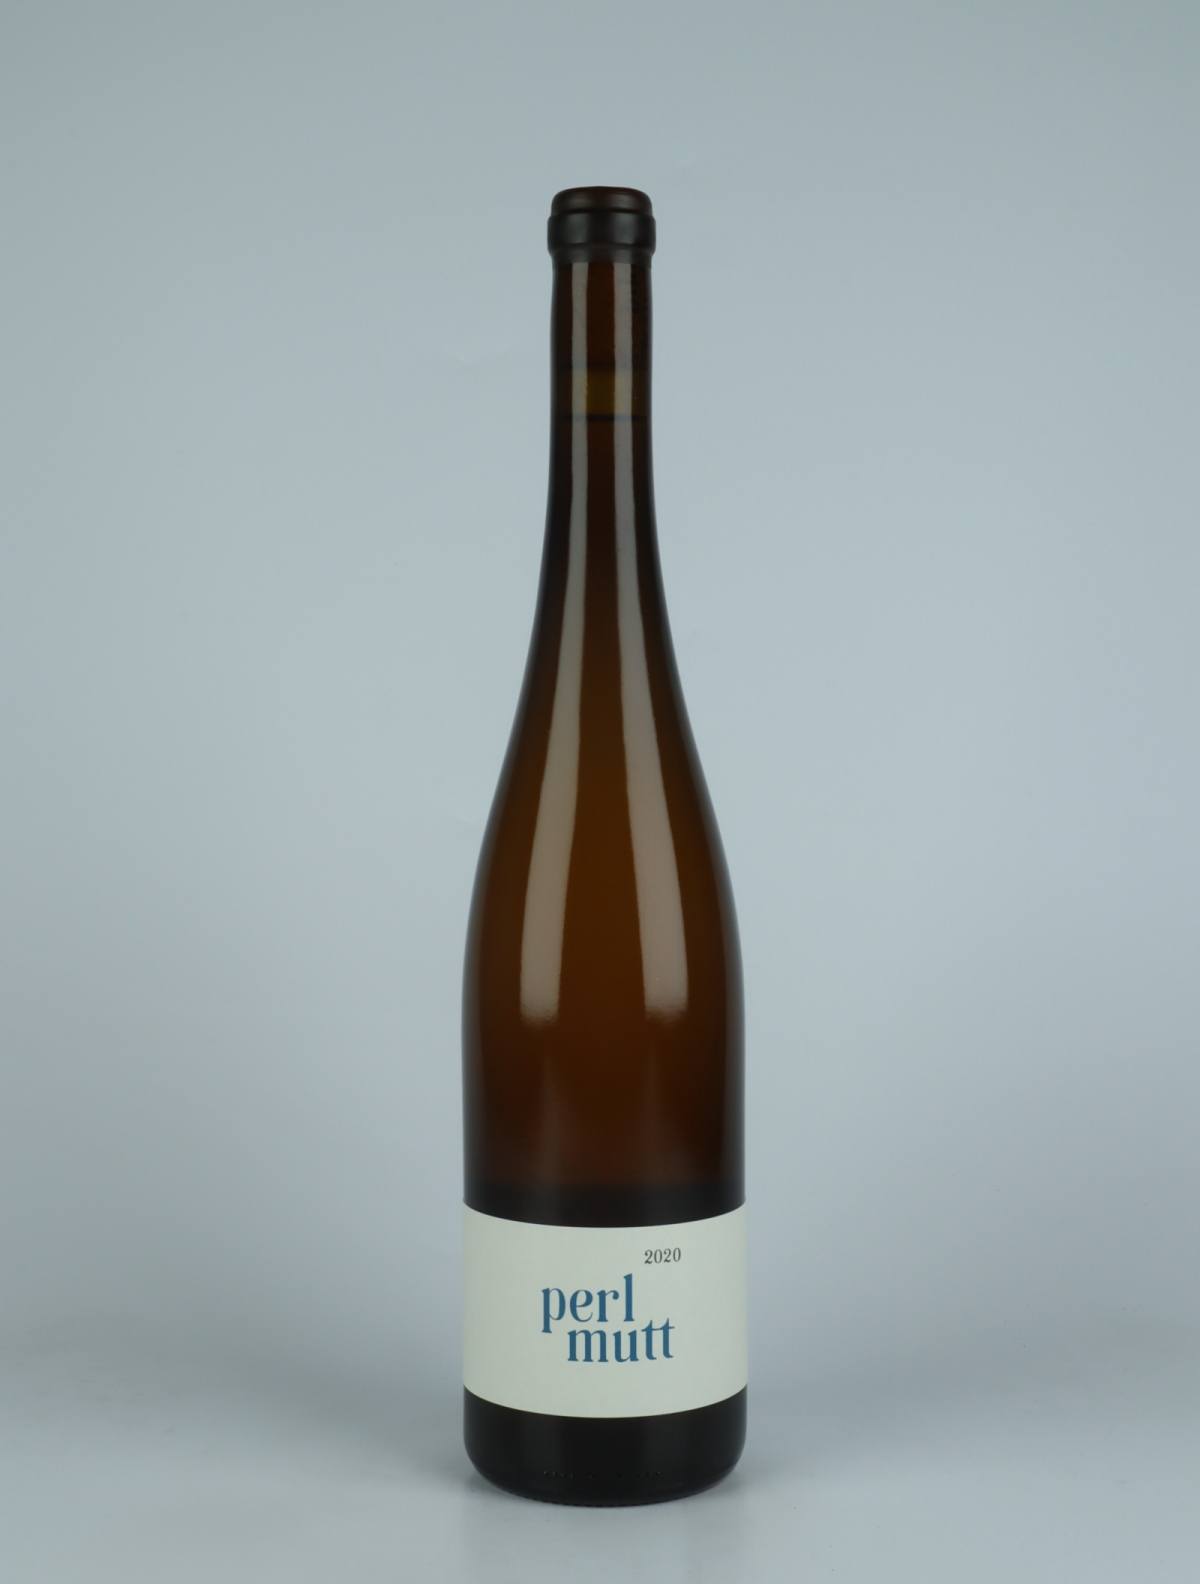 A bottle 2020 Perlmutt White wine from Jakob Tennstedt, Mosel in Germany